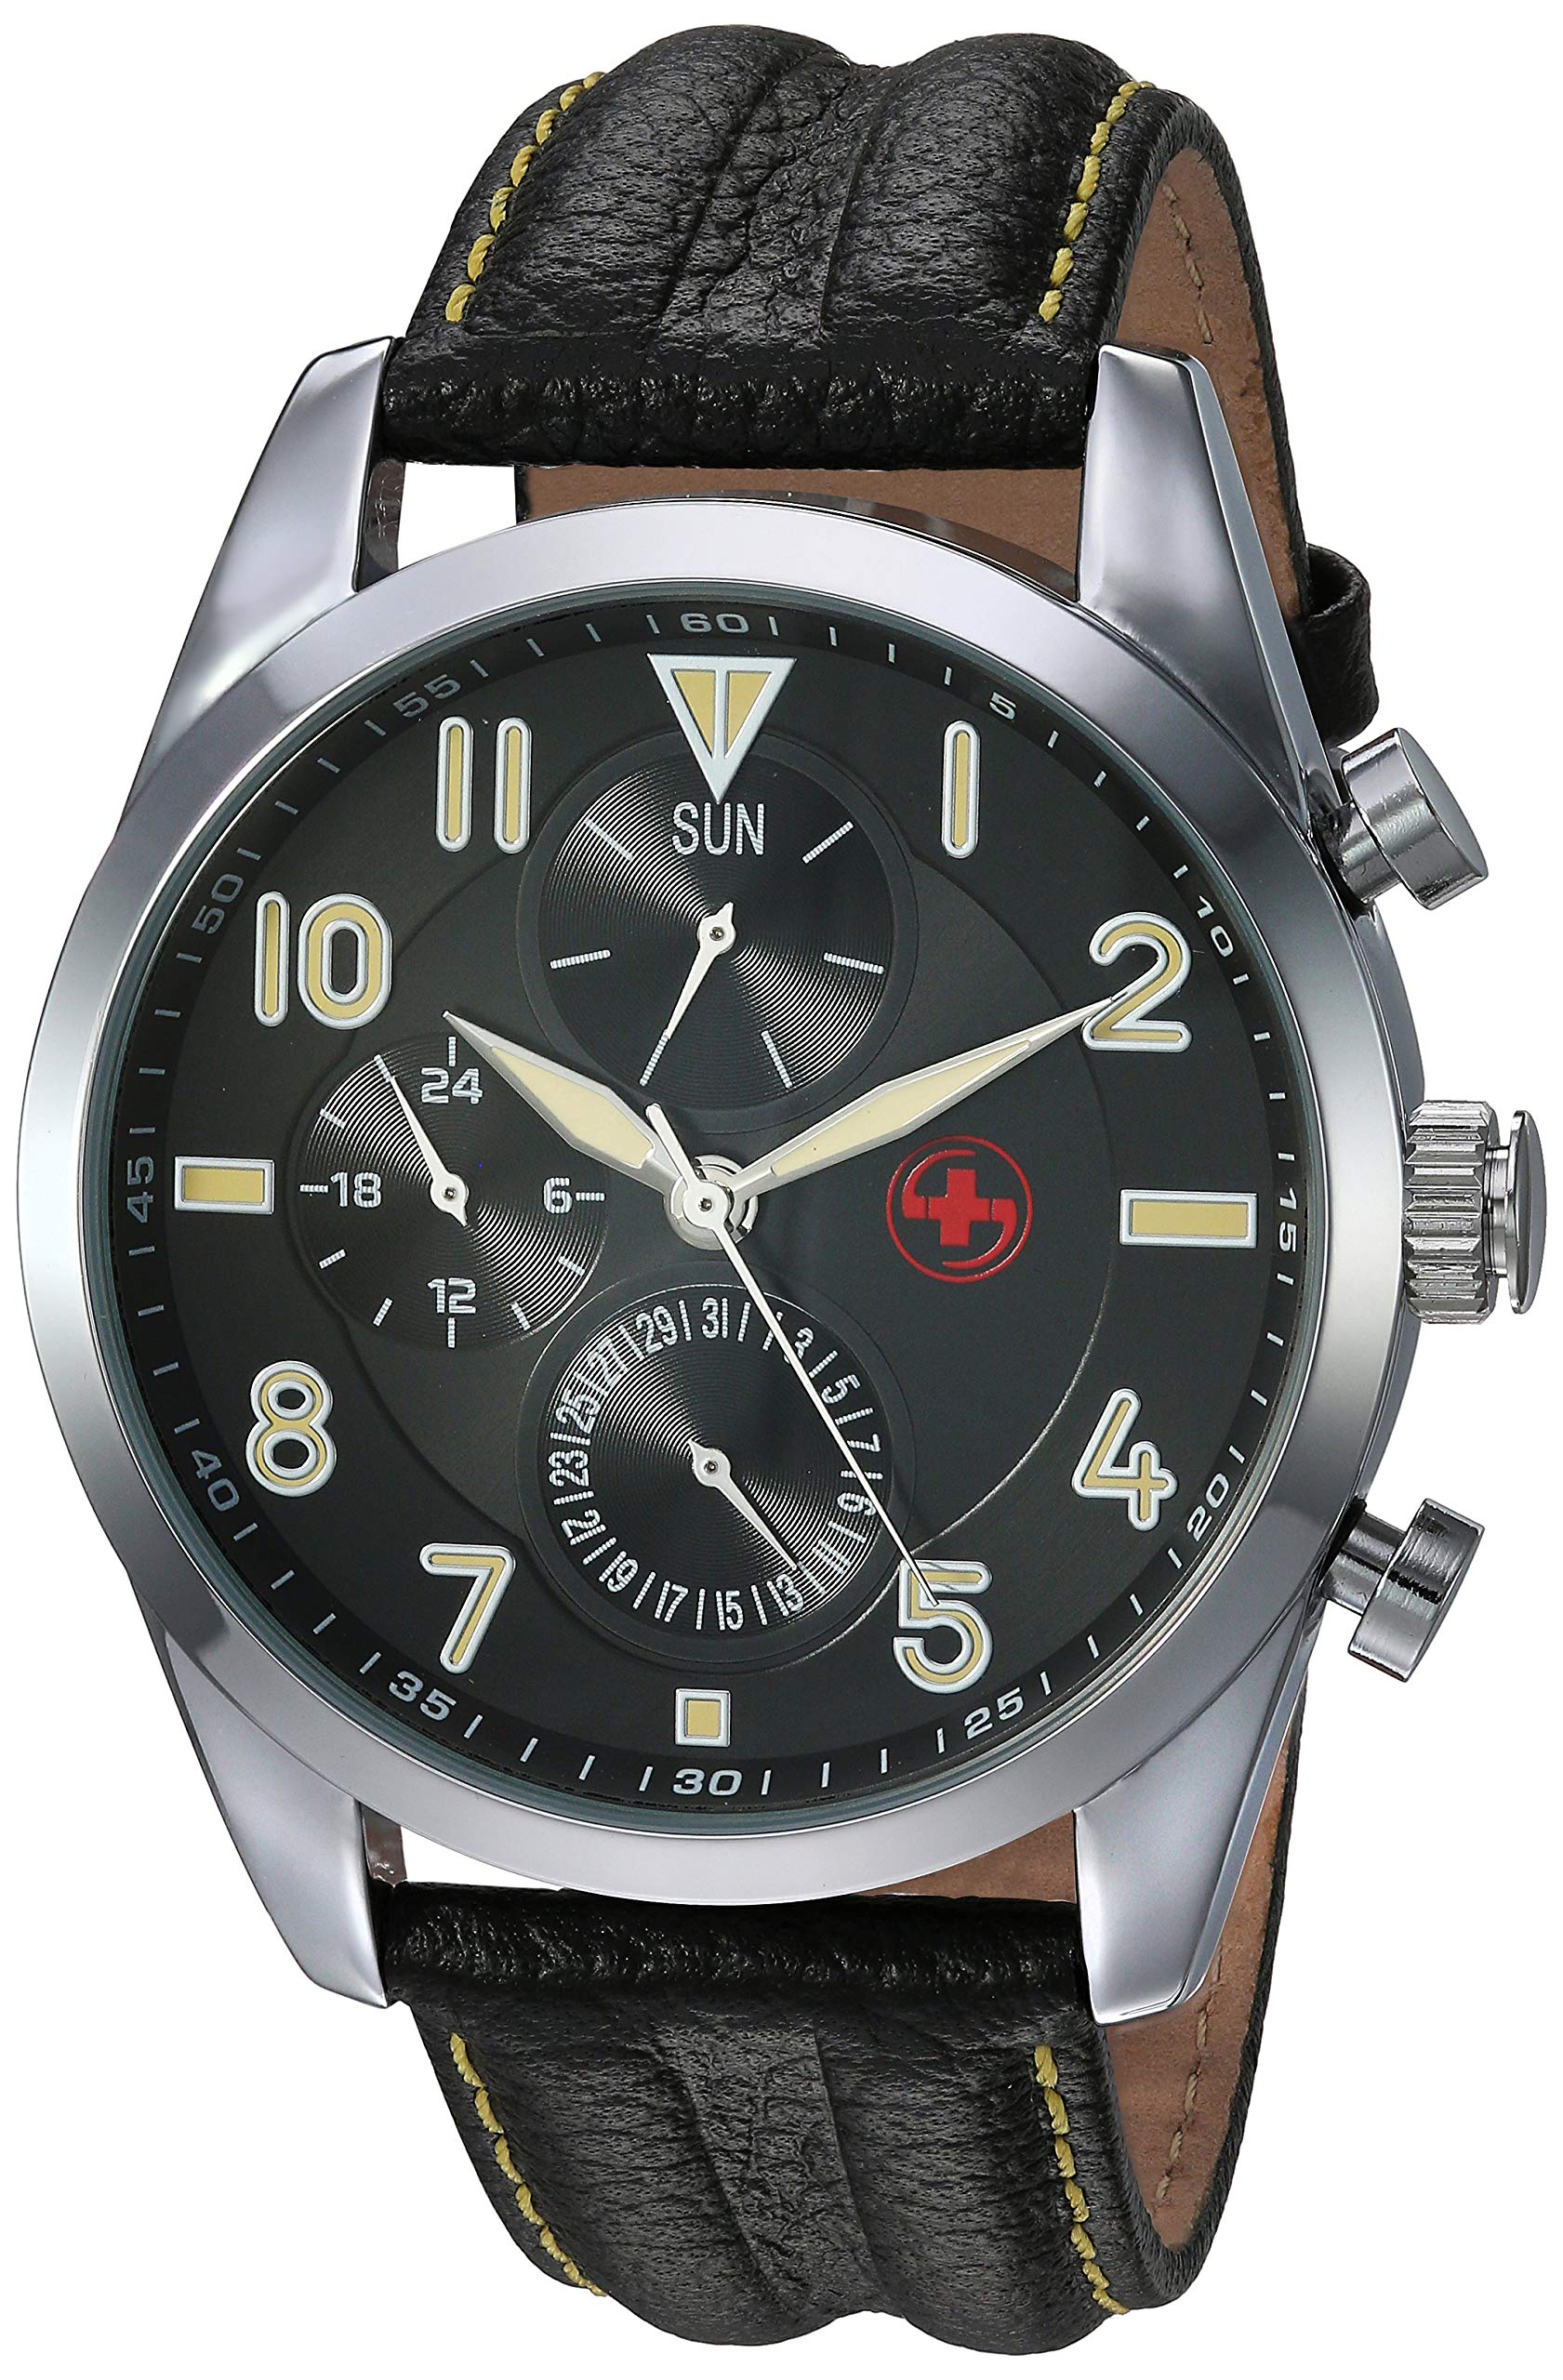 SWISSTEK Men's Red Stainless Steel Analog-Quartz Watch with Leather Strap, Black, 22 (Model: SKRD1801SPLB)